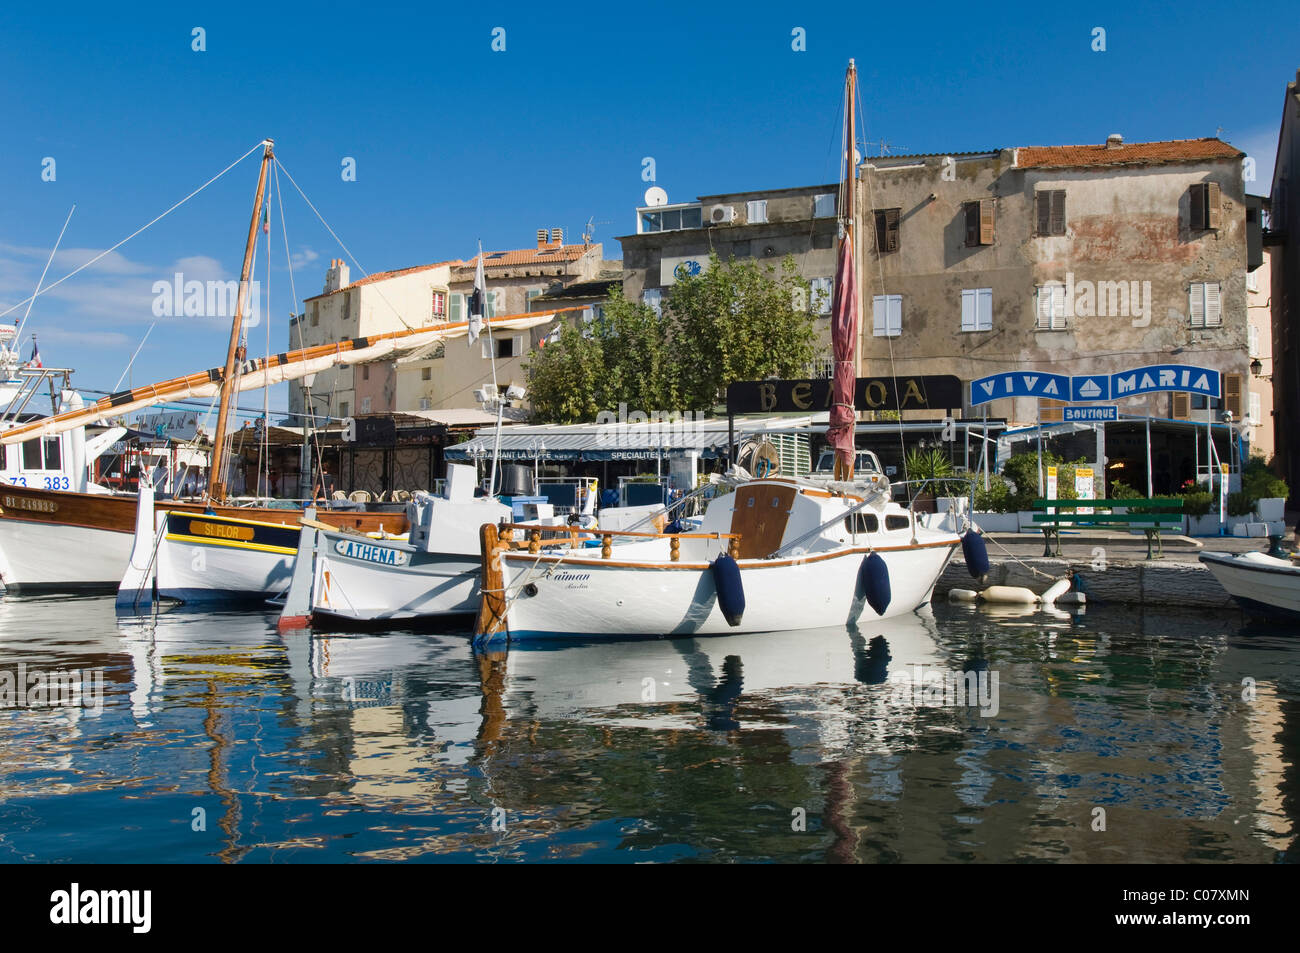 Fishing boats in the harbor, Saint Florent, Nebbio, Corsica, France, Europe Stock Photo